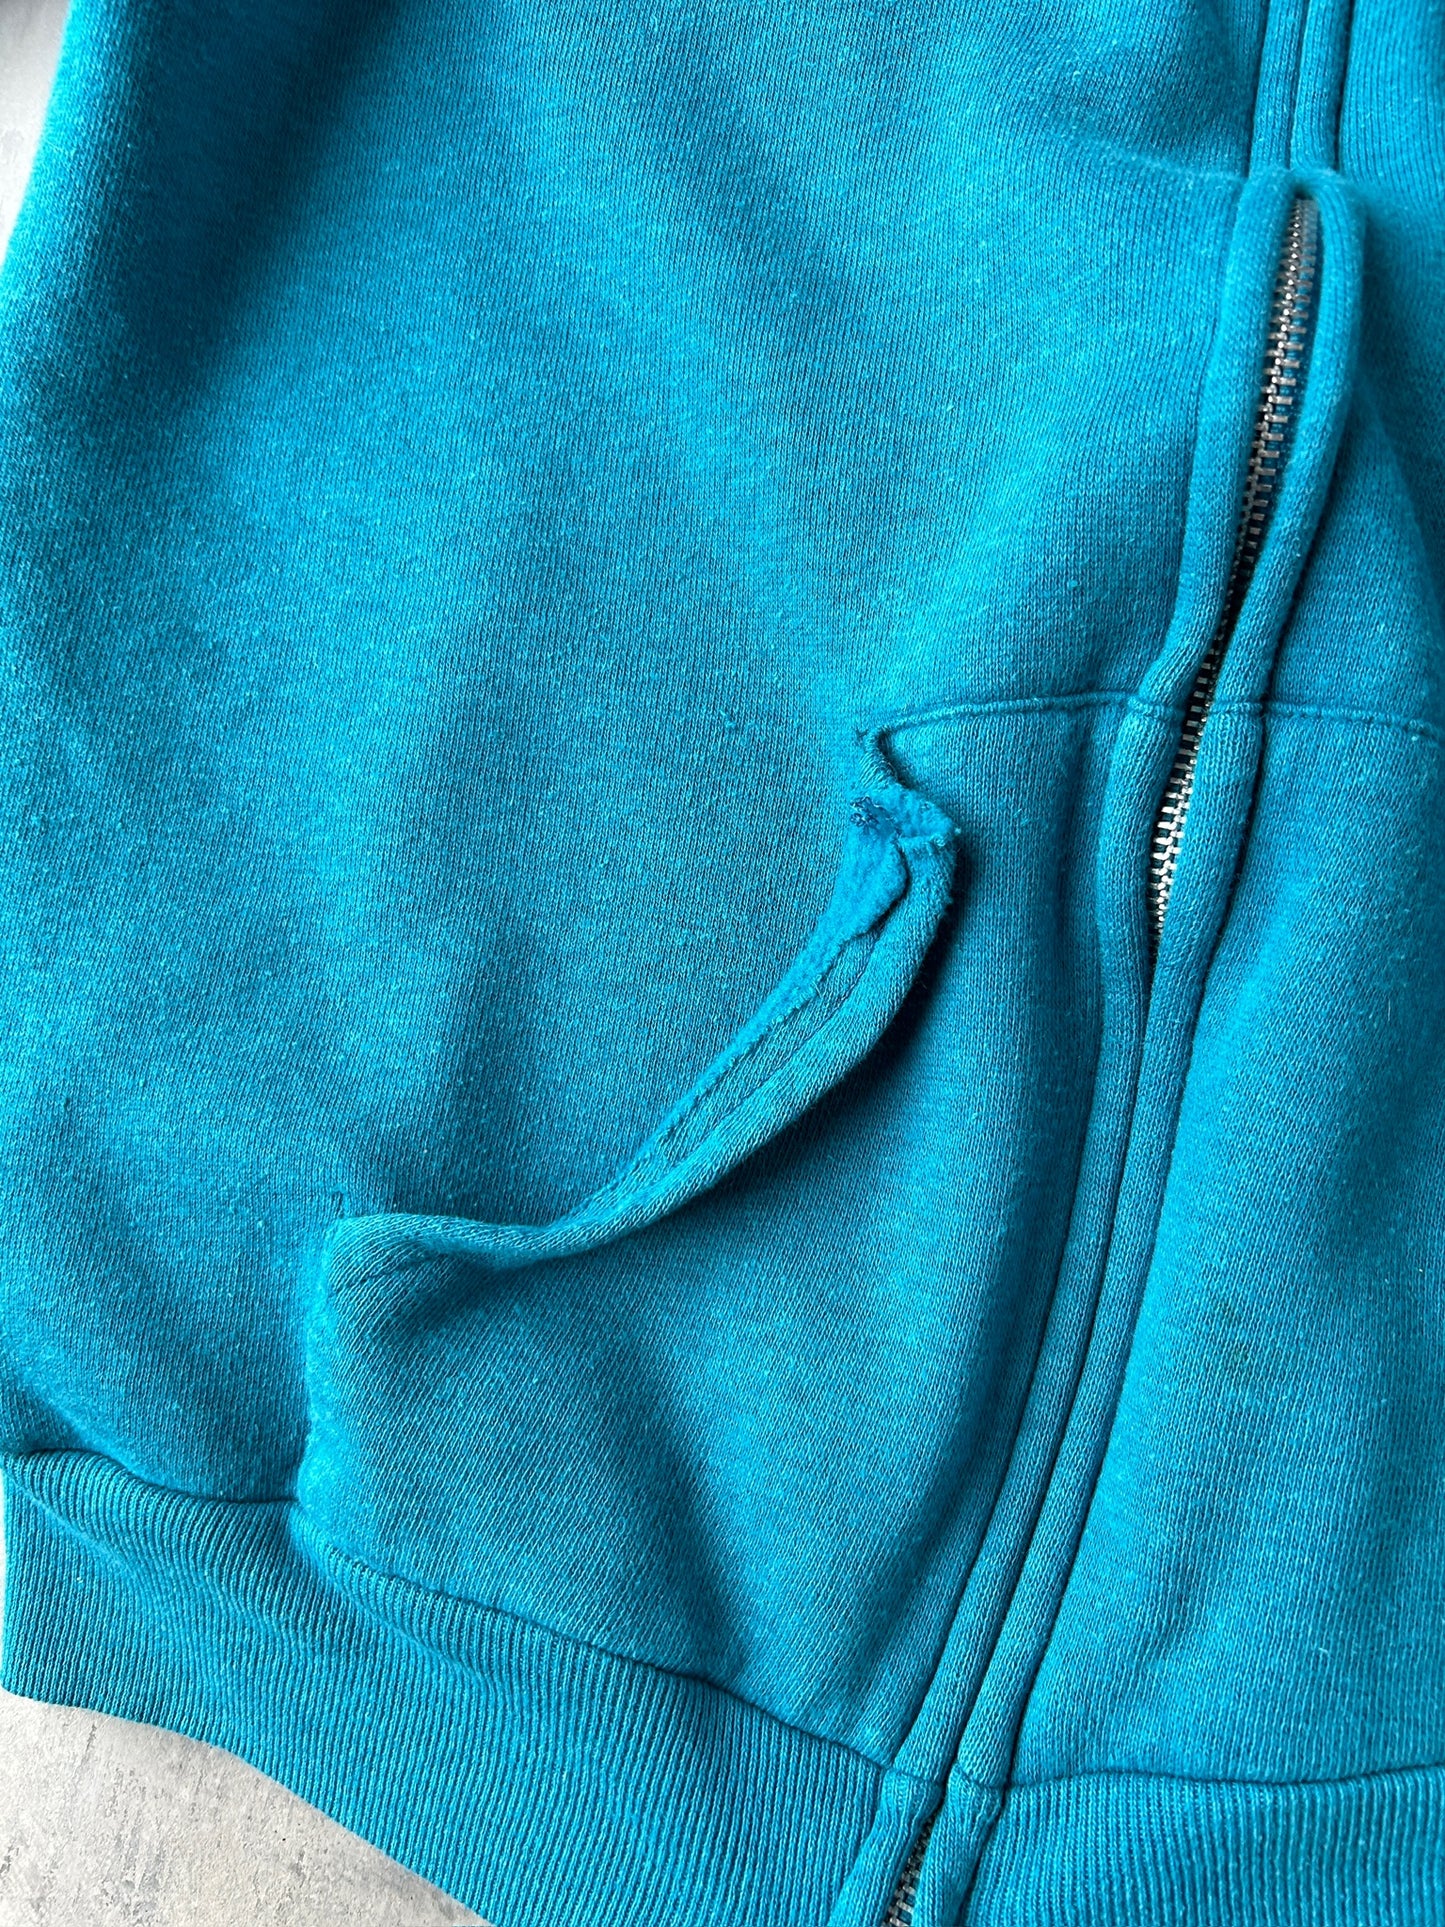 Aqua Blue Zippered Hoodie 80's - Medium